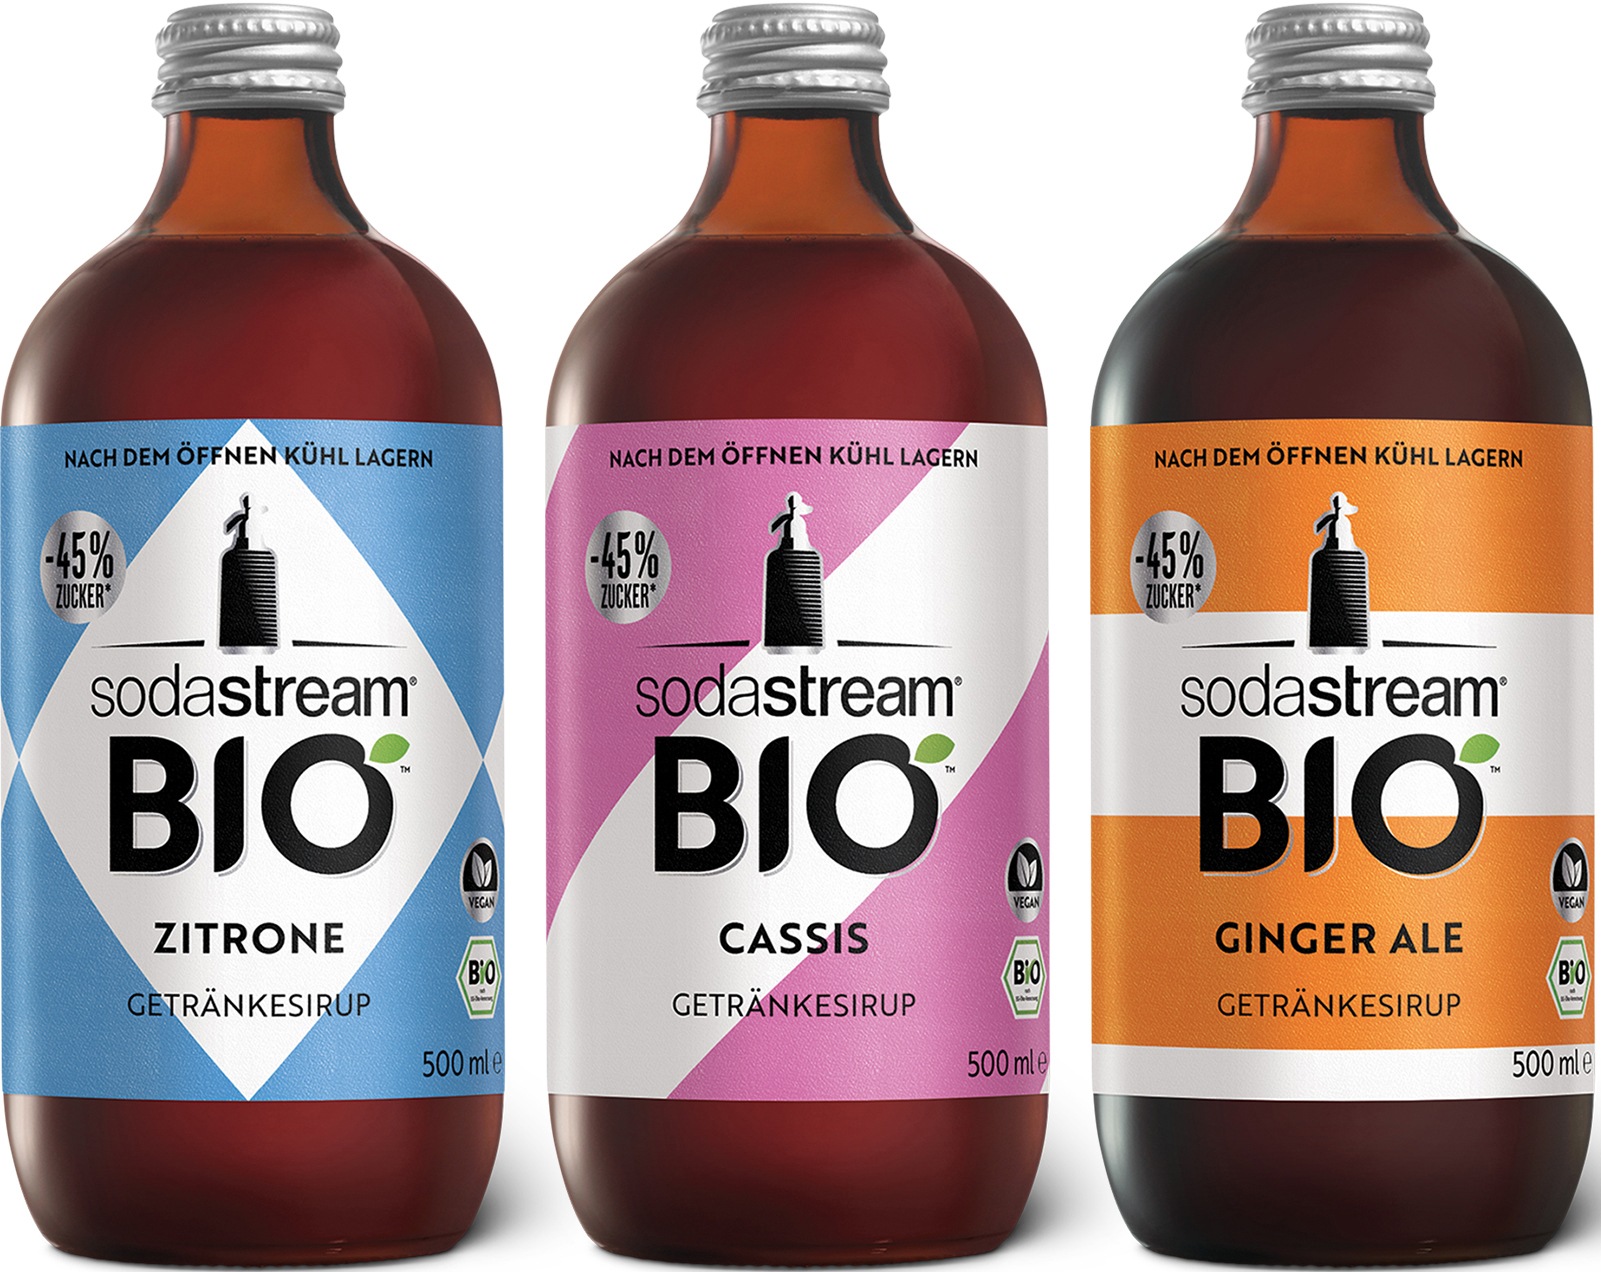 SodaStream Getränke-Sirup "BIO", Zitrone, Cassis, Ginger Ale, 0,5 l, (3 Flaschen), Flasche3,5 L Fertiggetränk, 500 ml (Zitrone, Cassis, Ginger Ale)